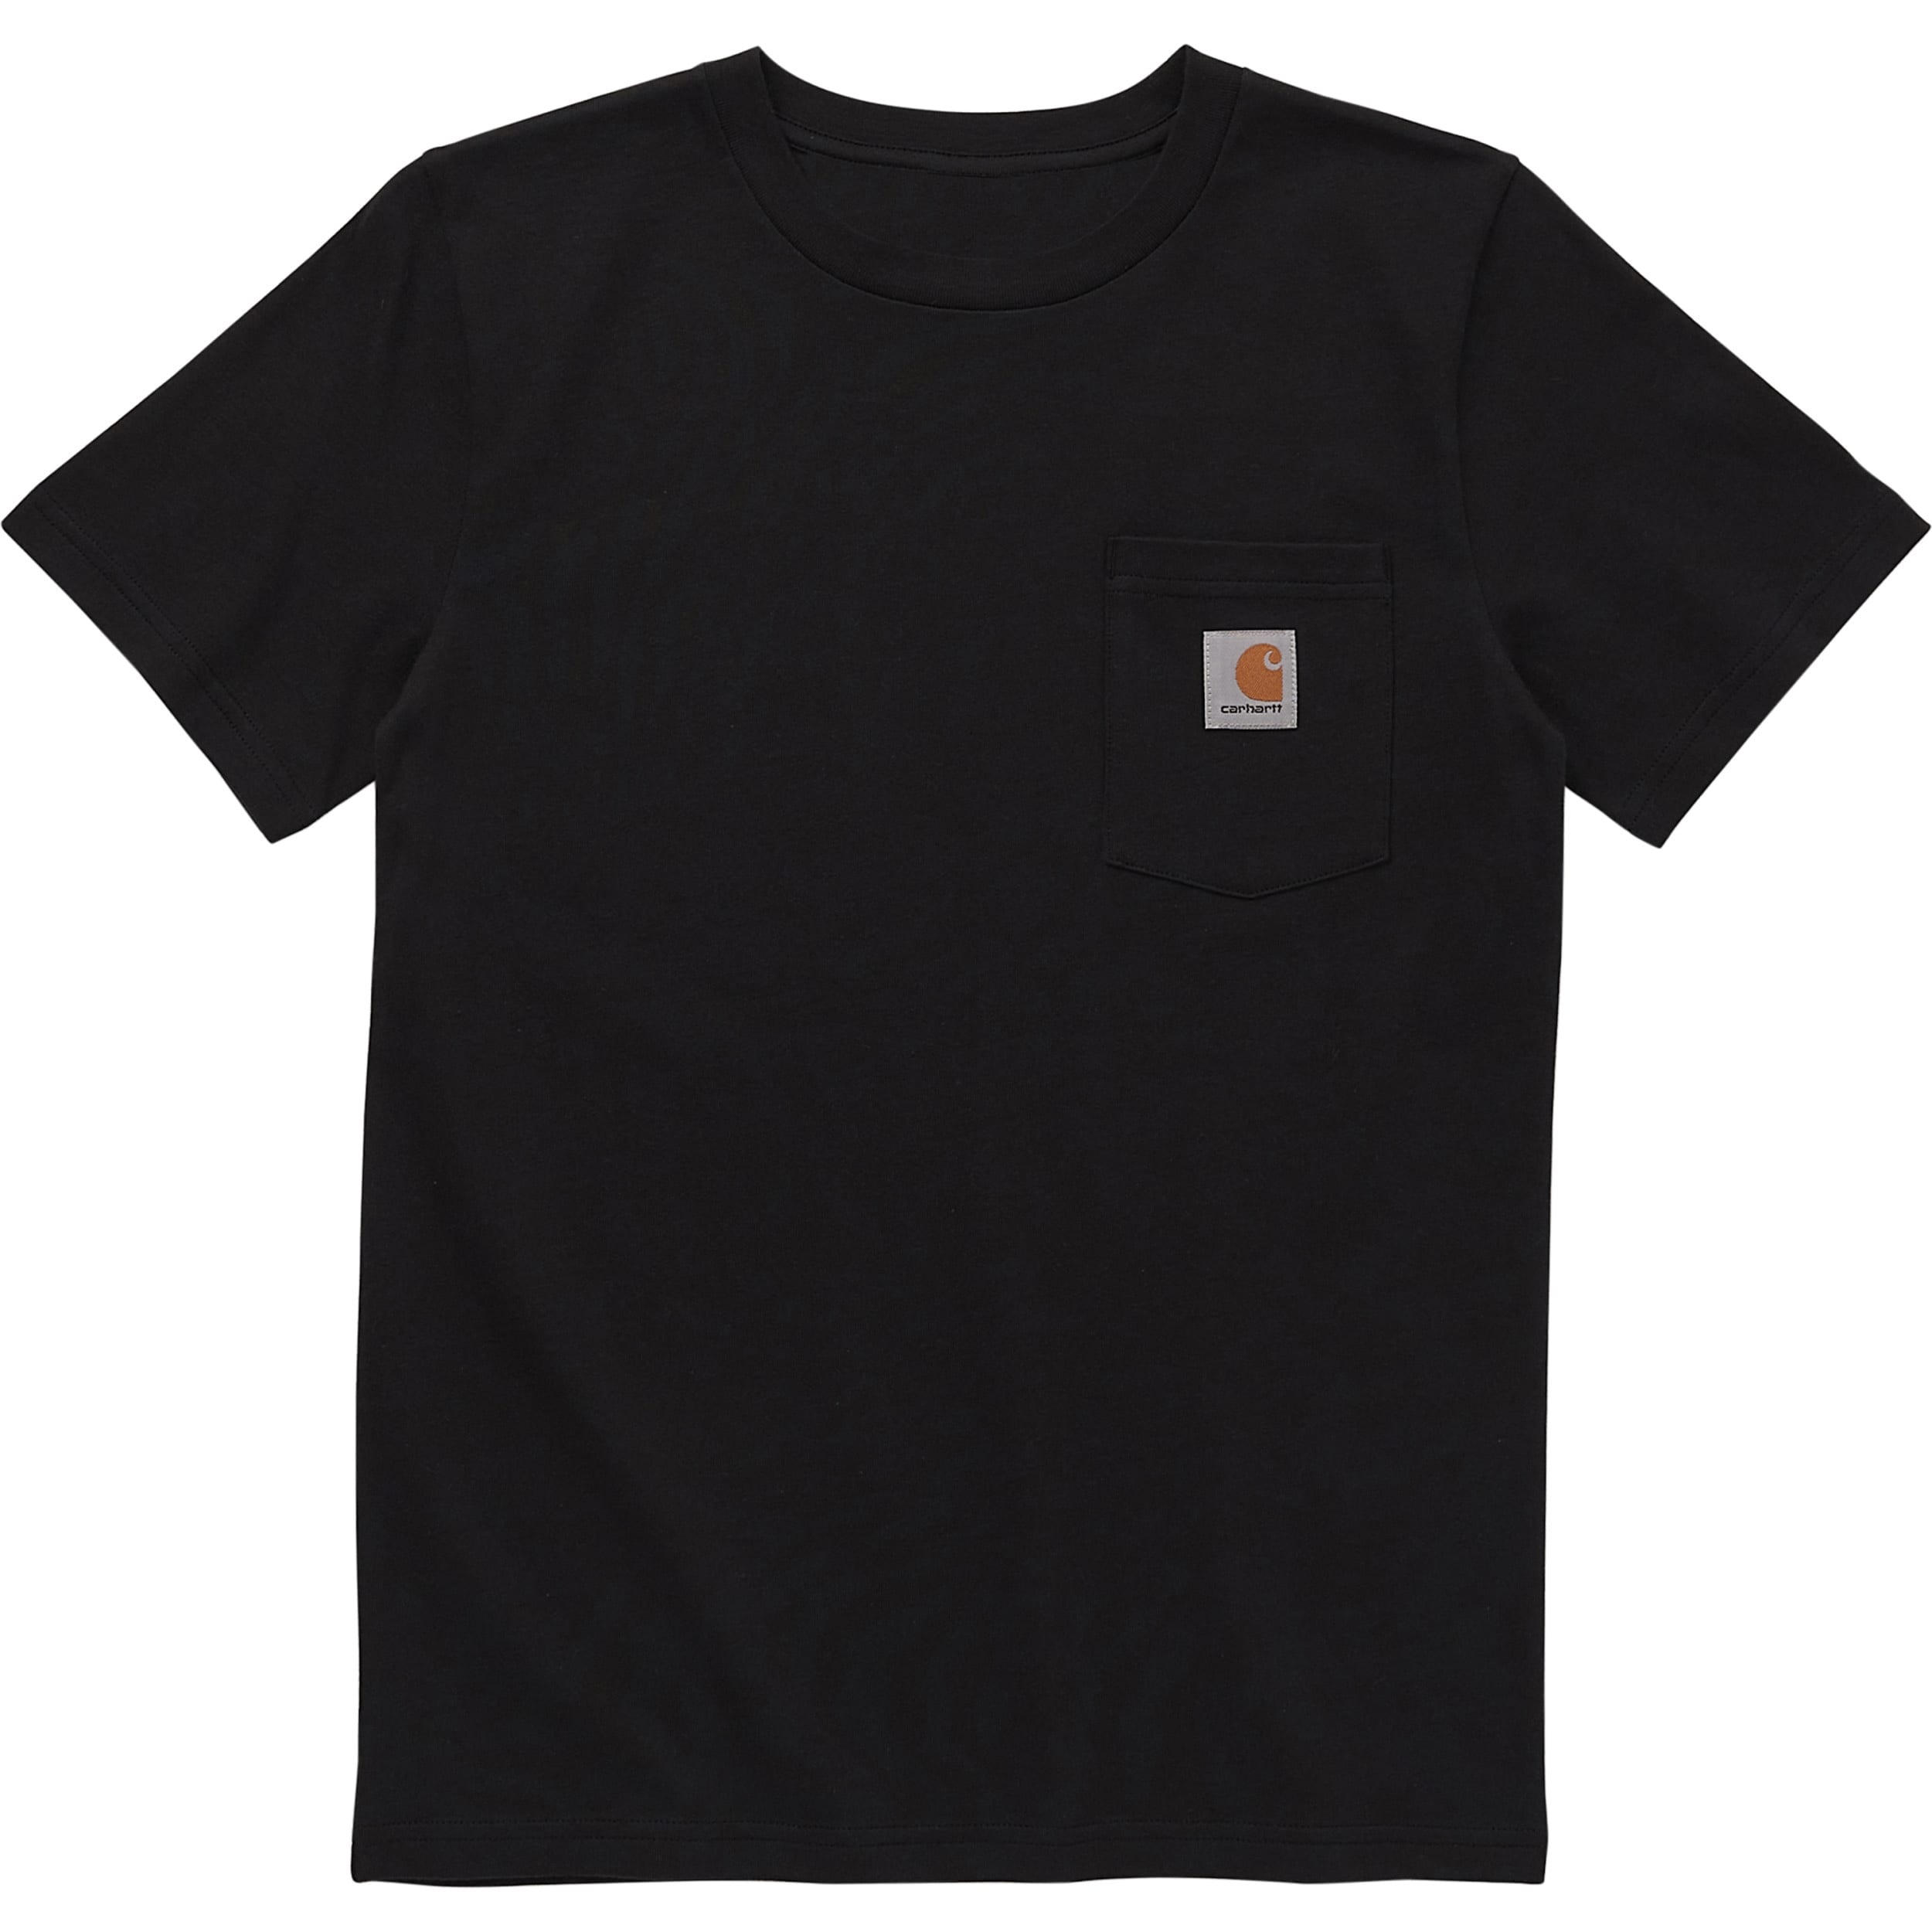 Carhartt® Boys’ Gradient Short-Sleeve T-Shirt